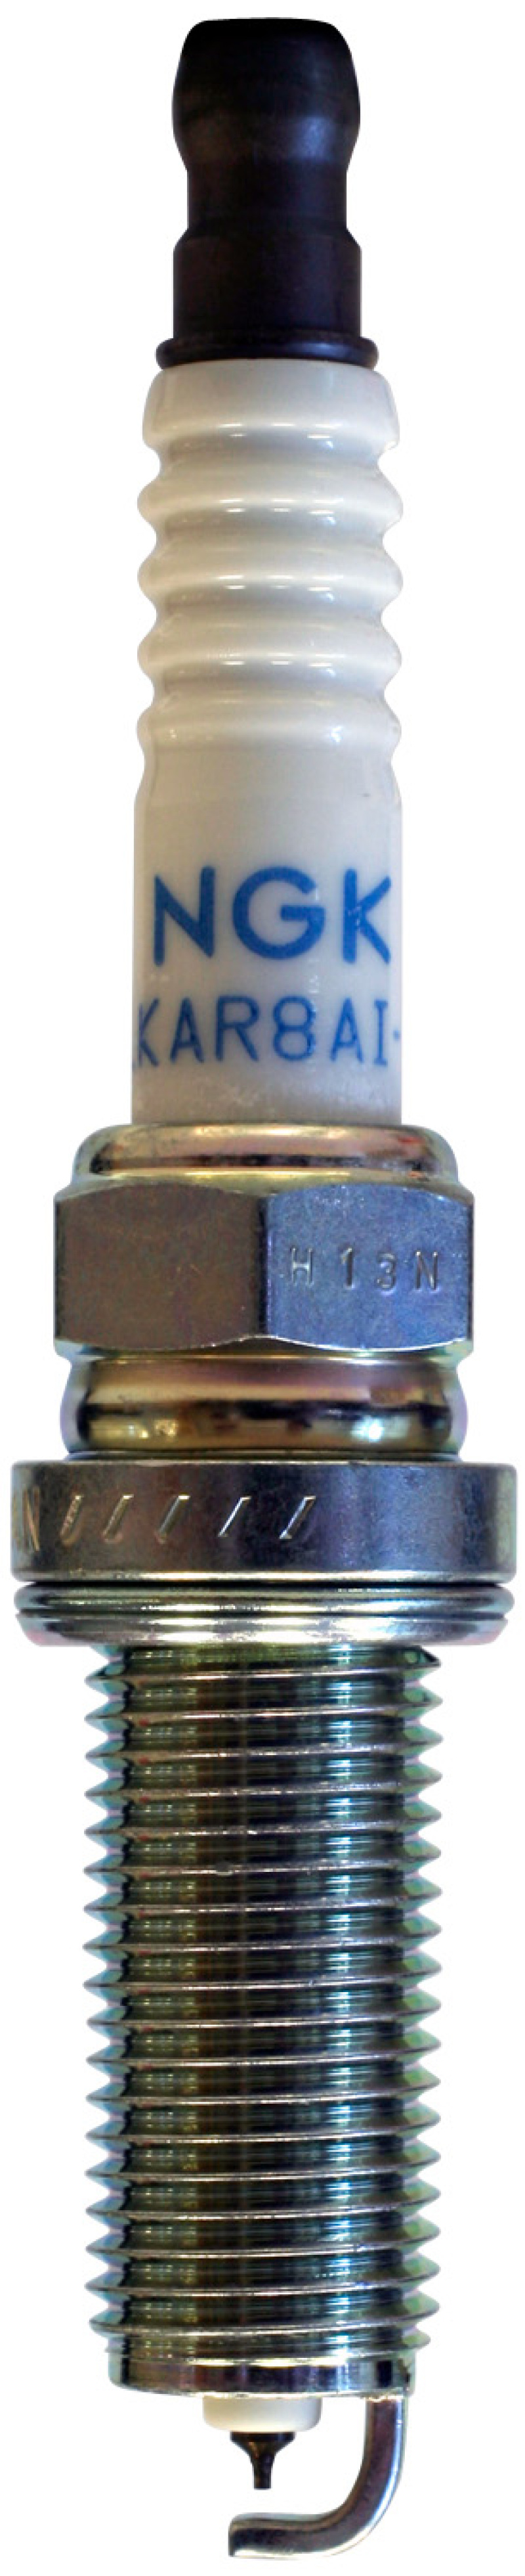 NGK Iridium/Platinum Spark Plug Box of 4 (LKAR8AI-9) - 6706